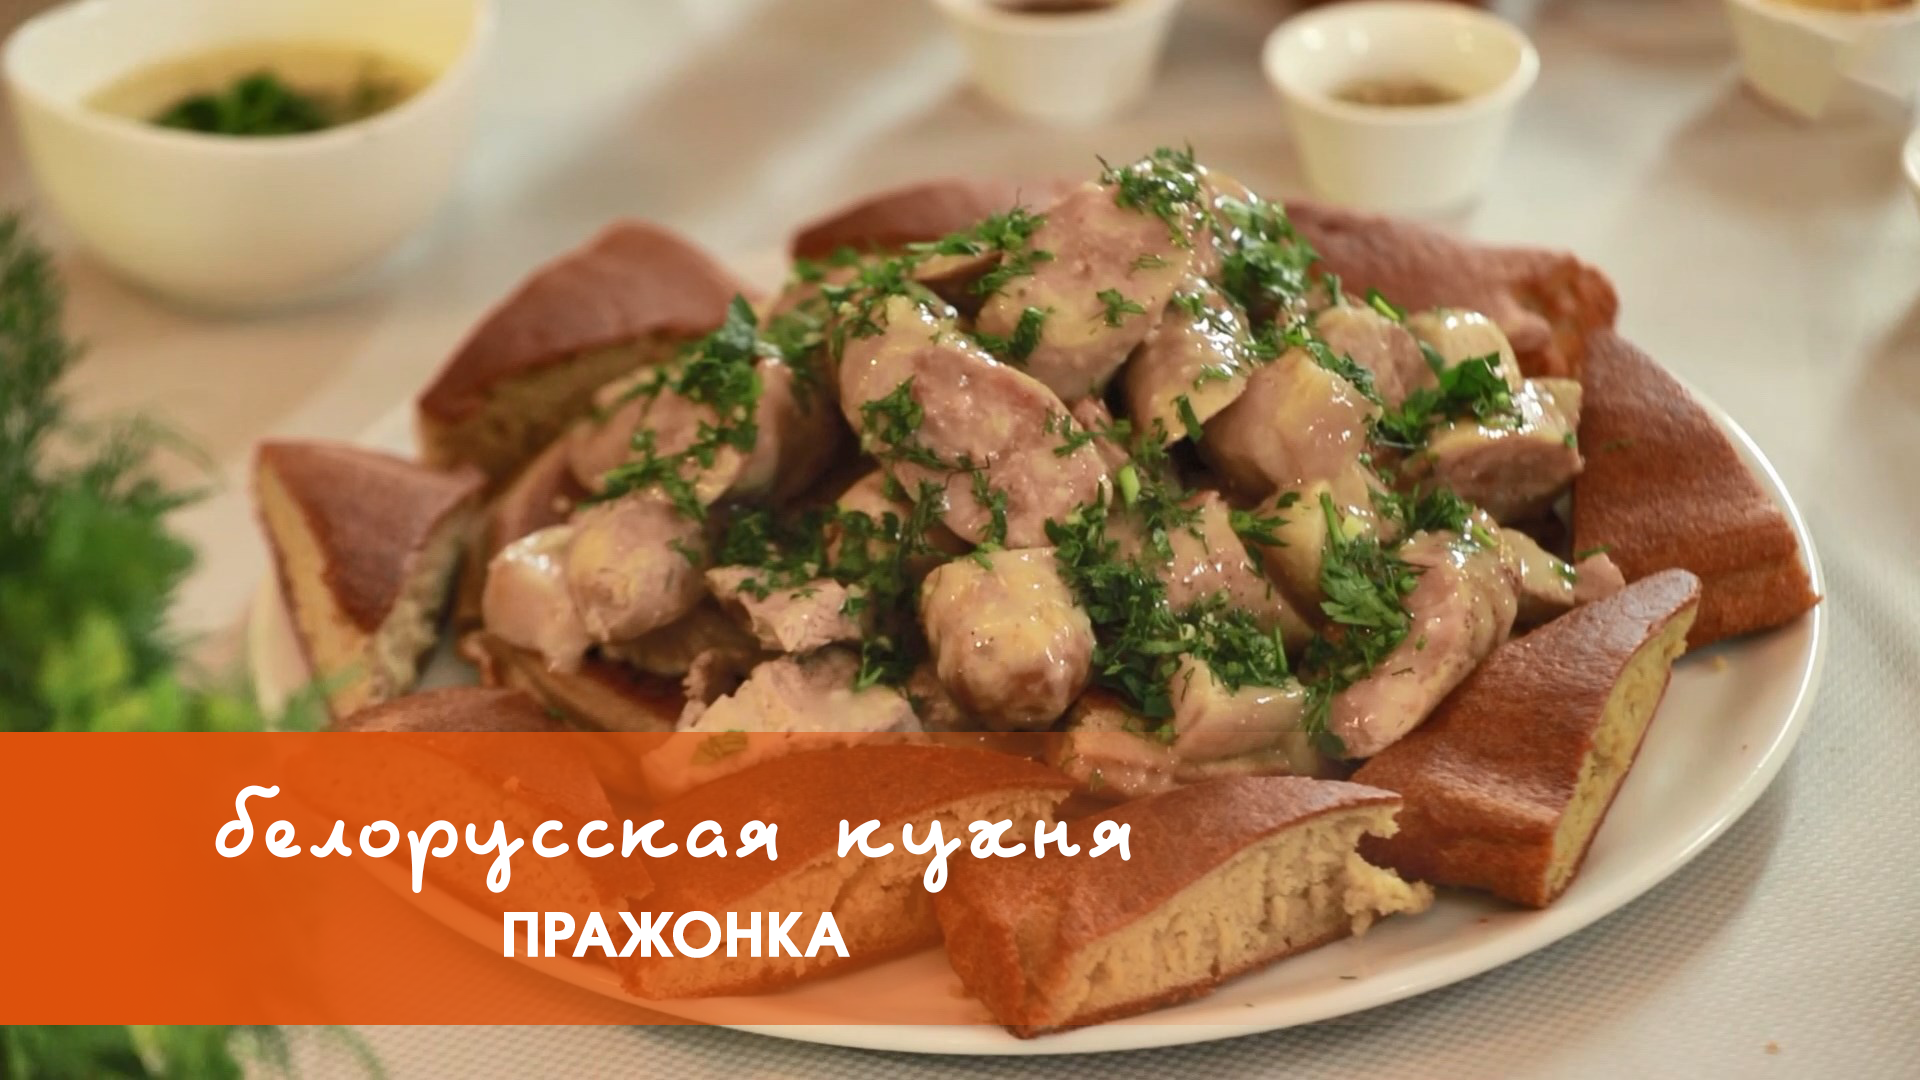 Белорусская кухня: пражонка